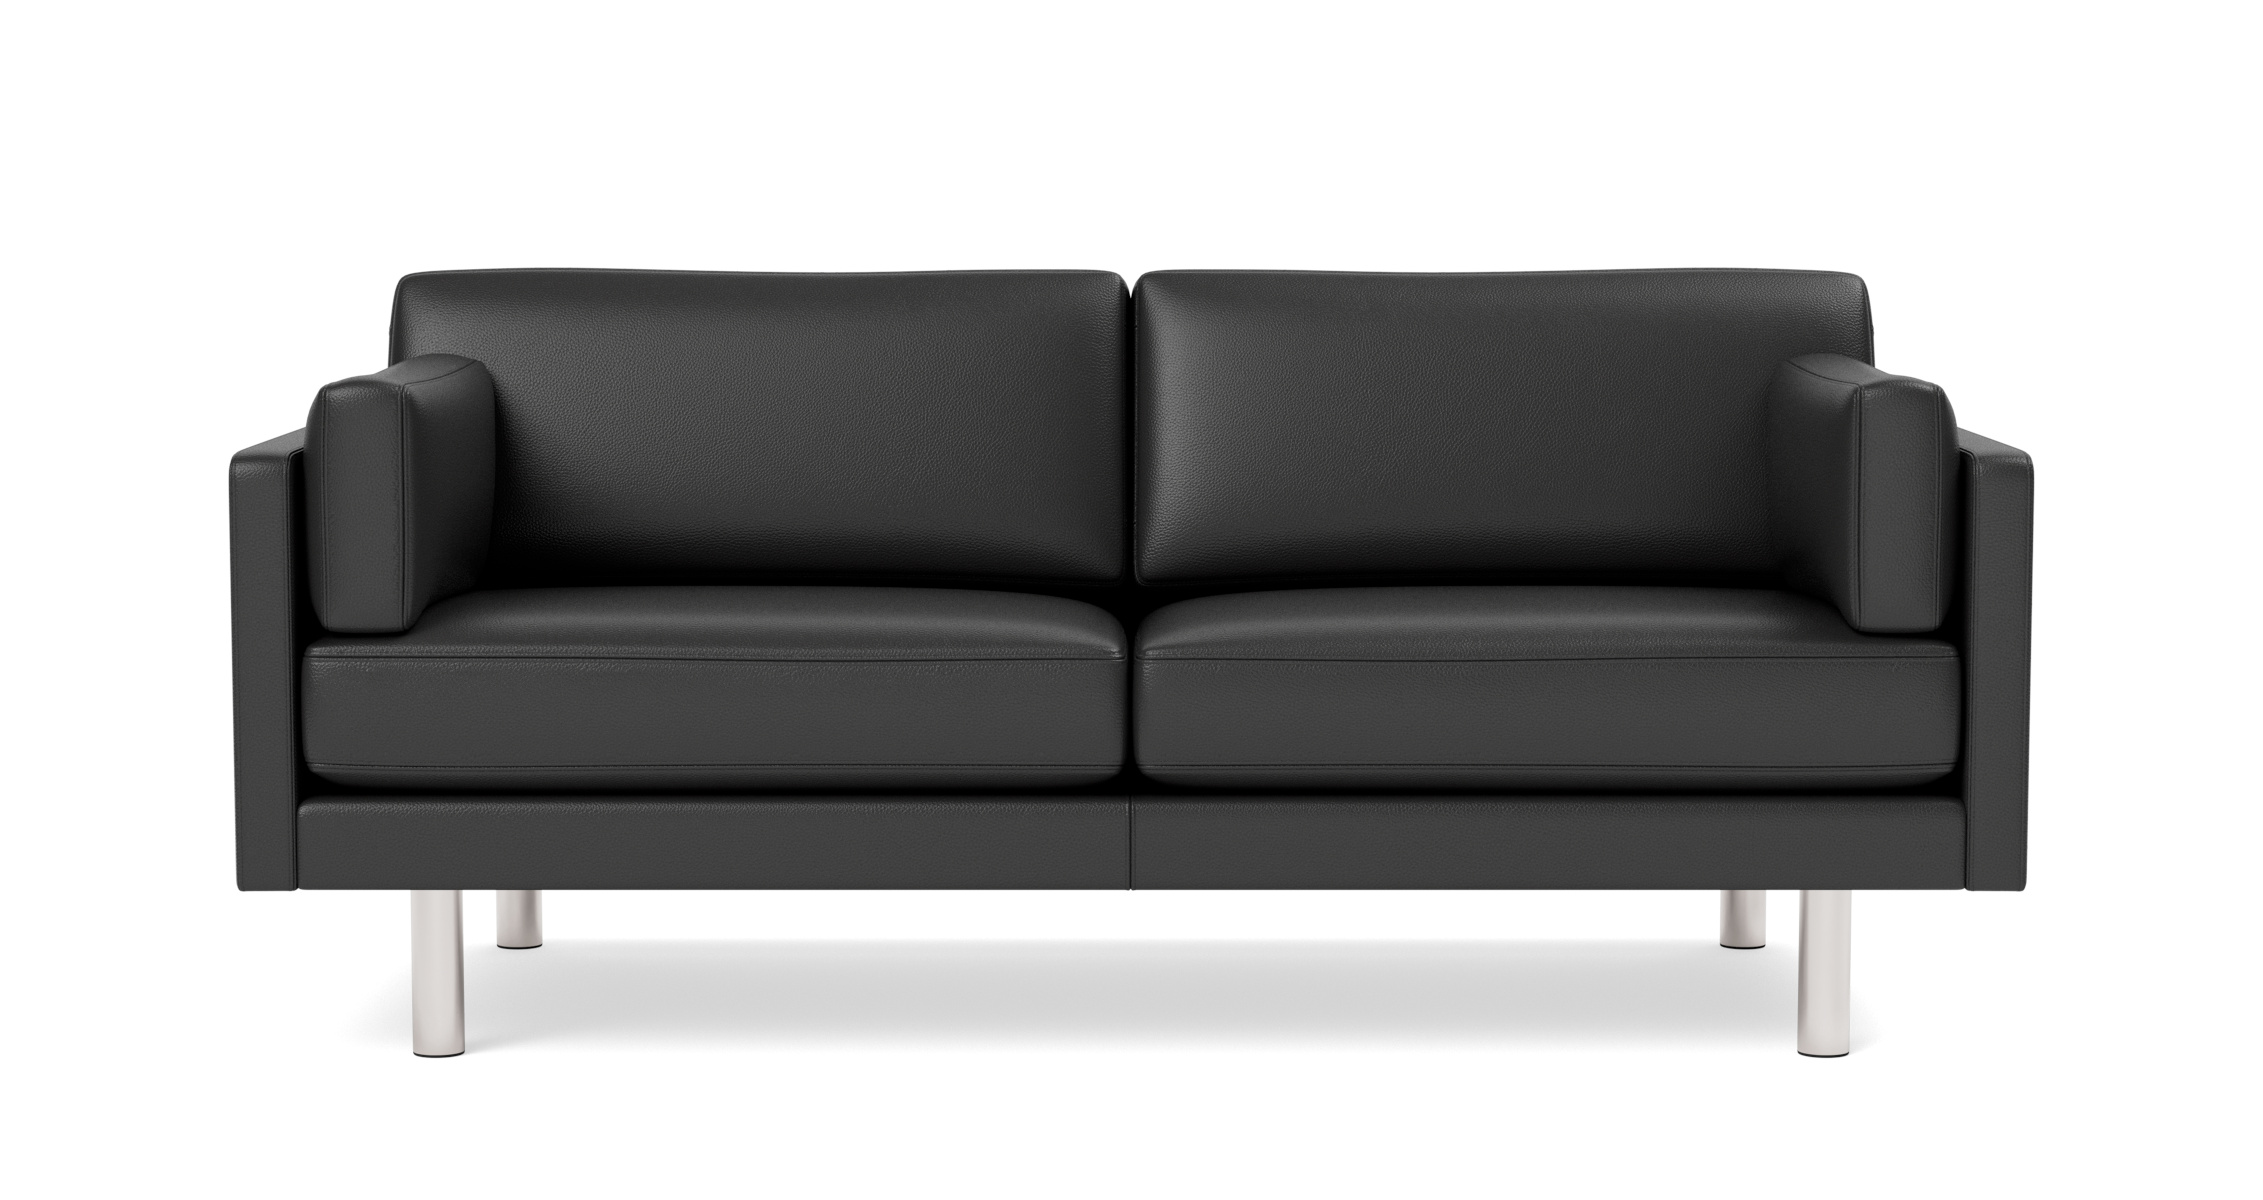 EJ220 Sofa 2-Sitzer, 86 cm, eiche geseift / erik, 9998 broken grey